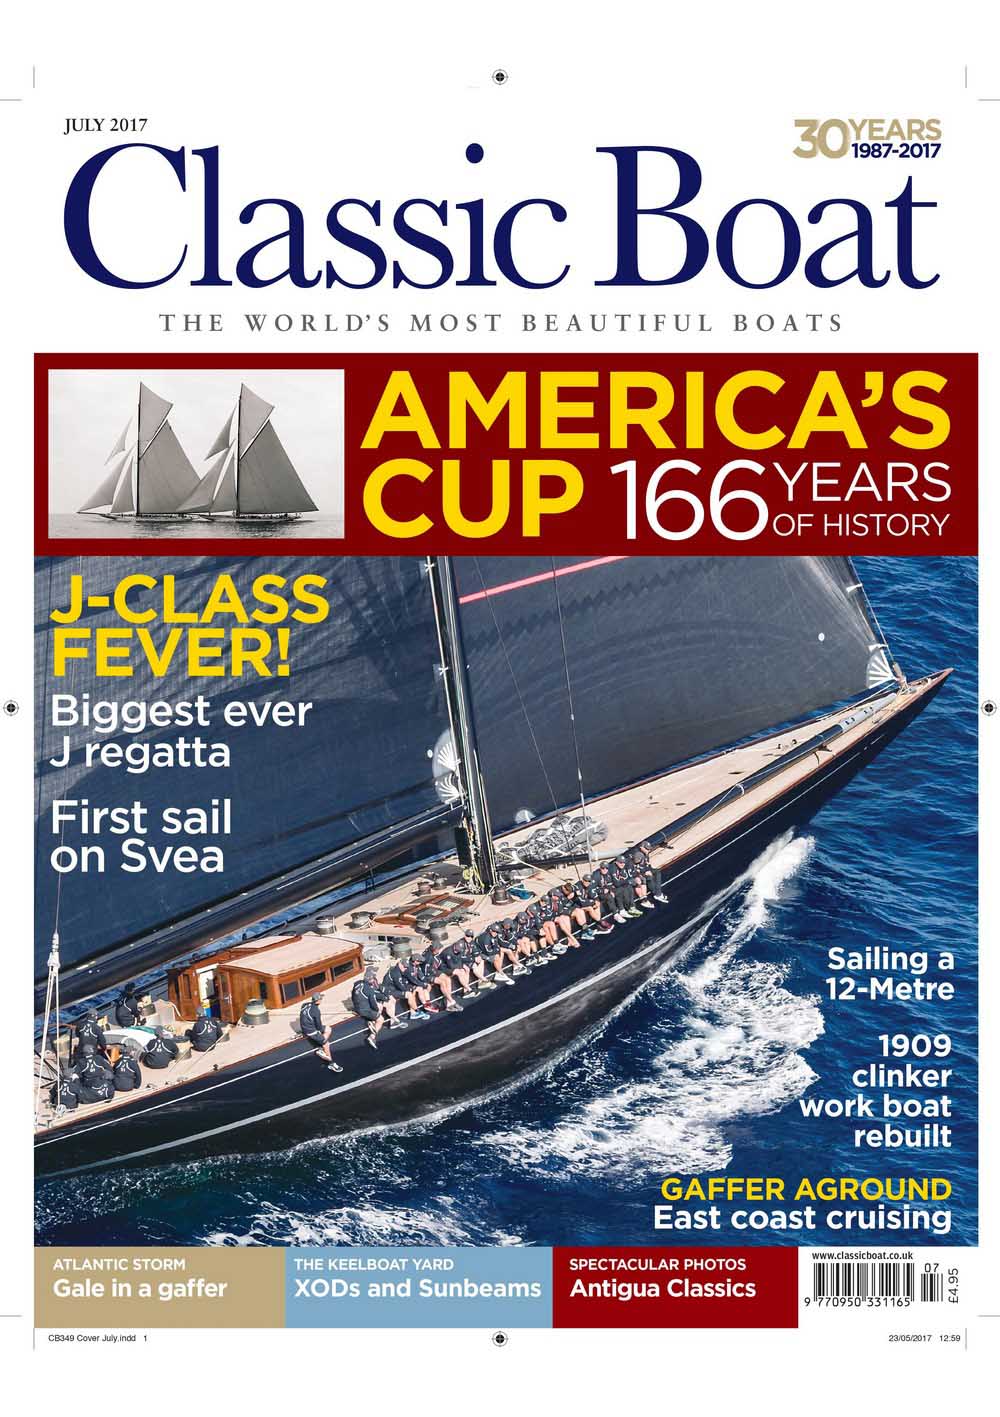 "Classic Boat" Magazine Interview